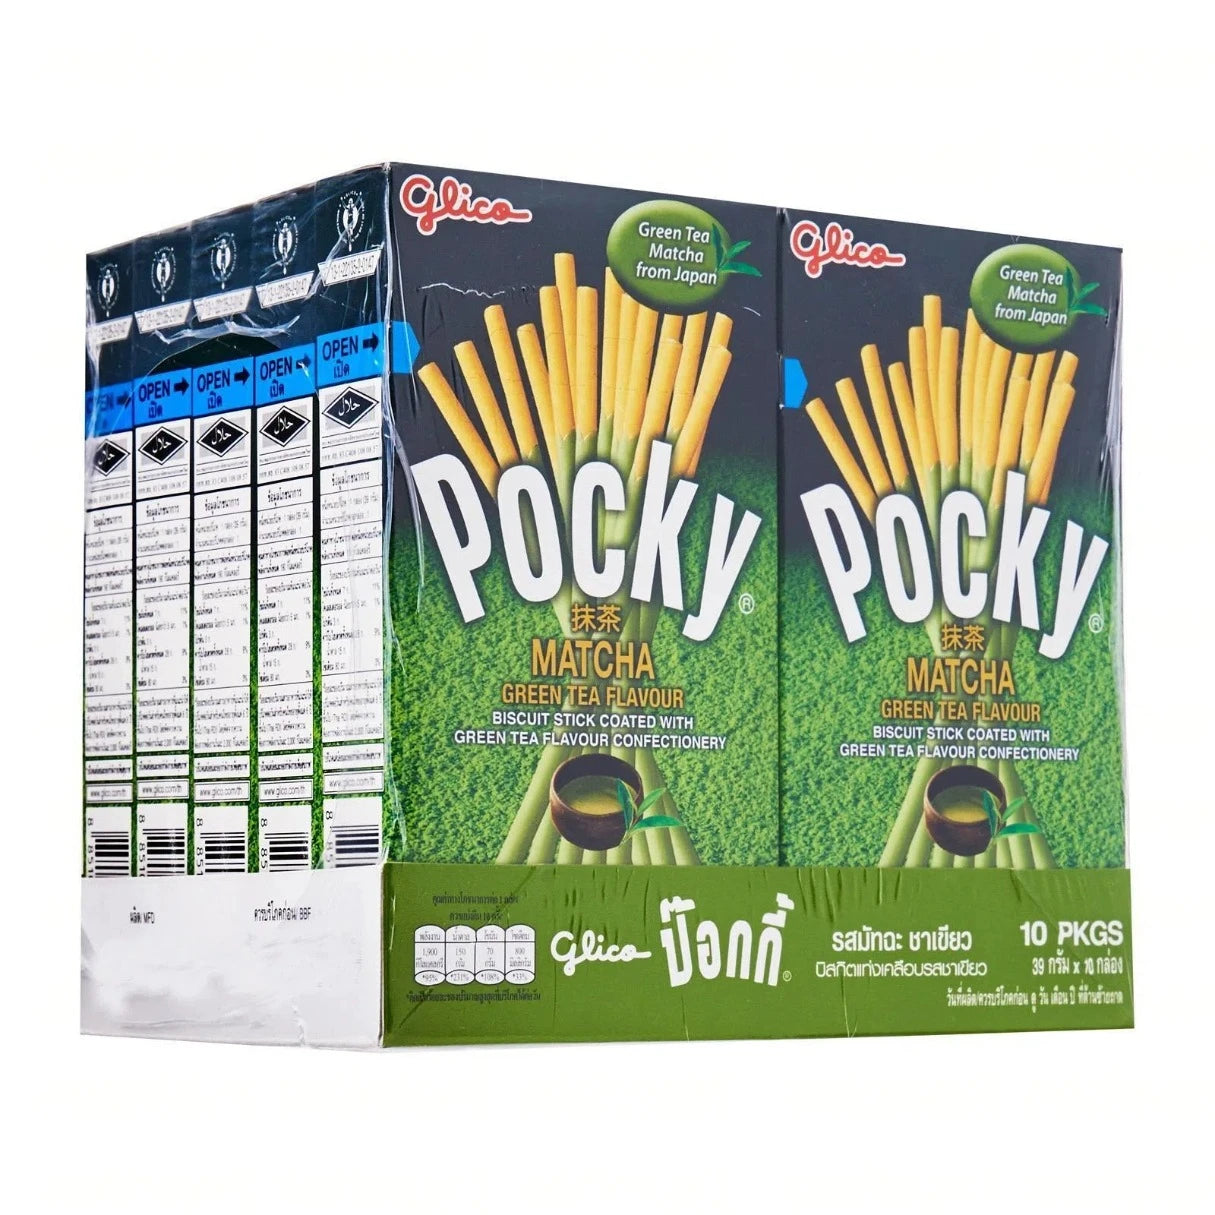 Glico Pocky Matcha Green Tea 1.41oz - 10ct